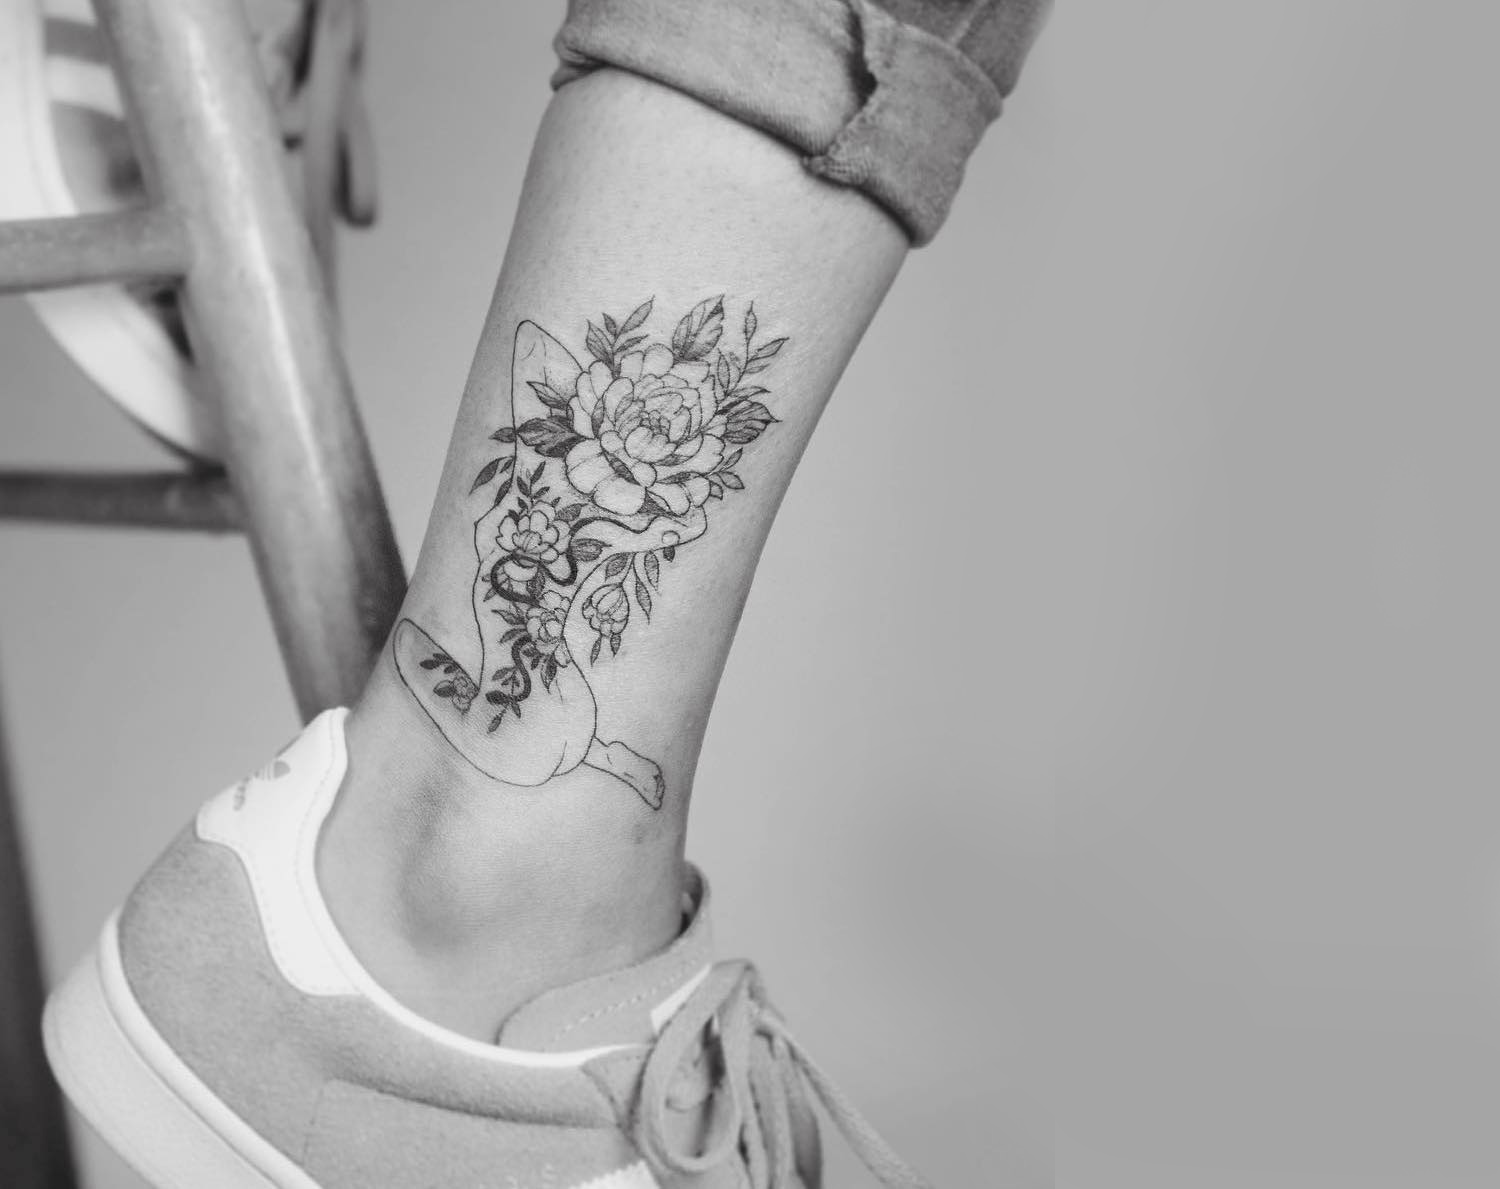 Tattoo on leg by Phoebe Hunter